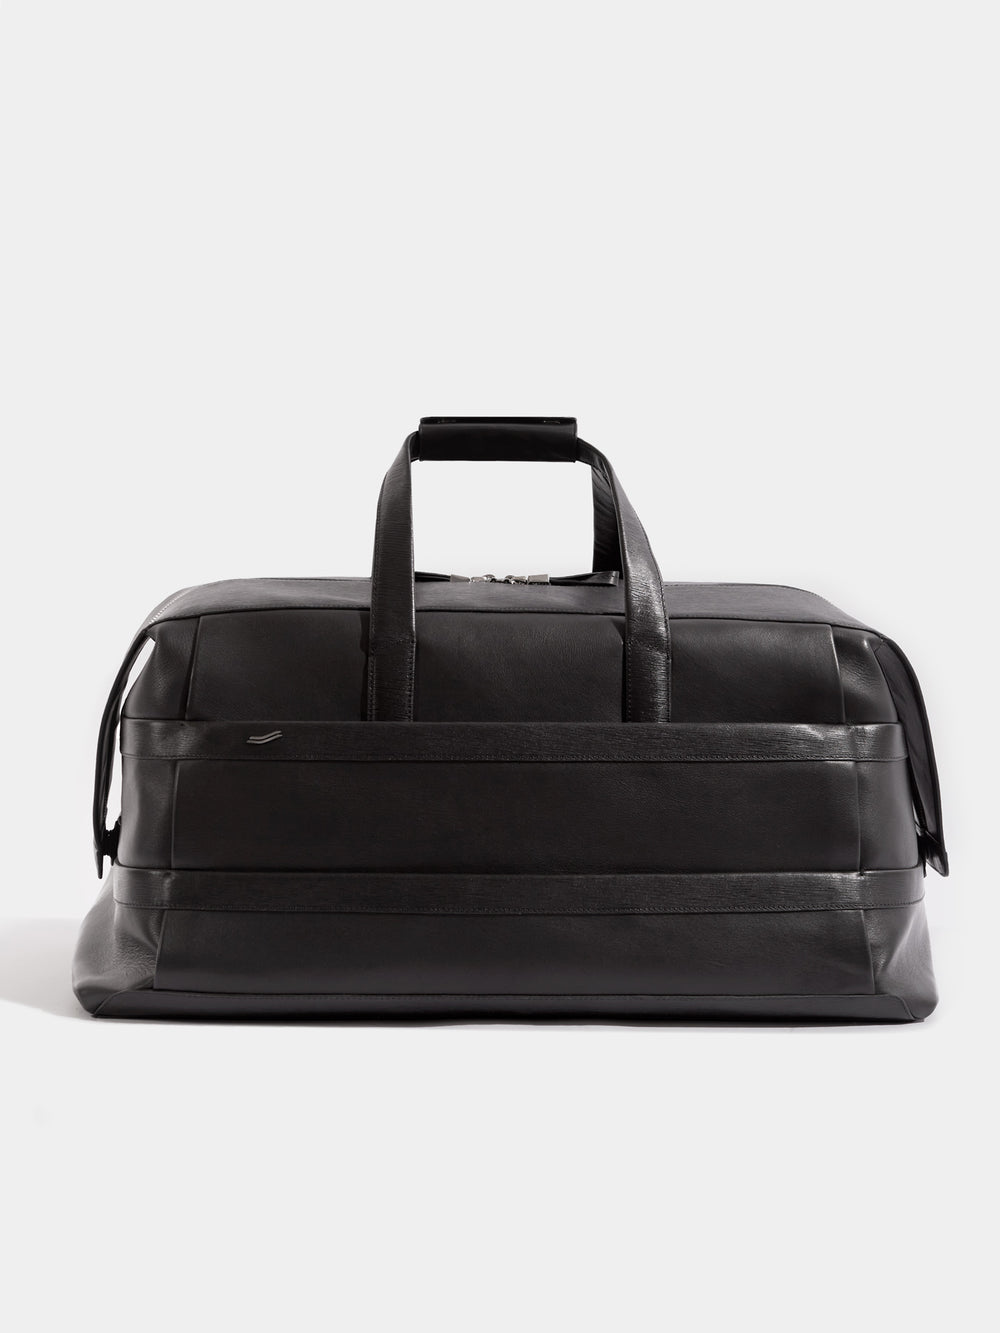 vantage black leather large weekender bag front reisetasche reisegepäck